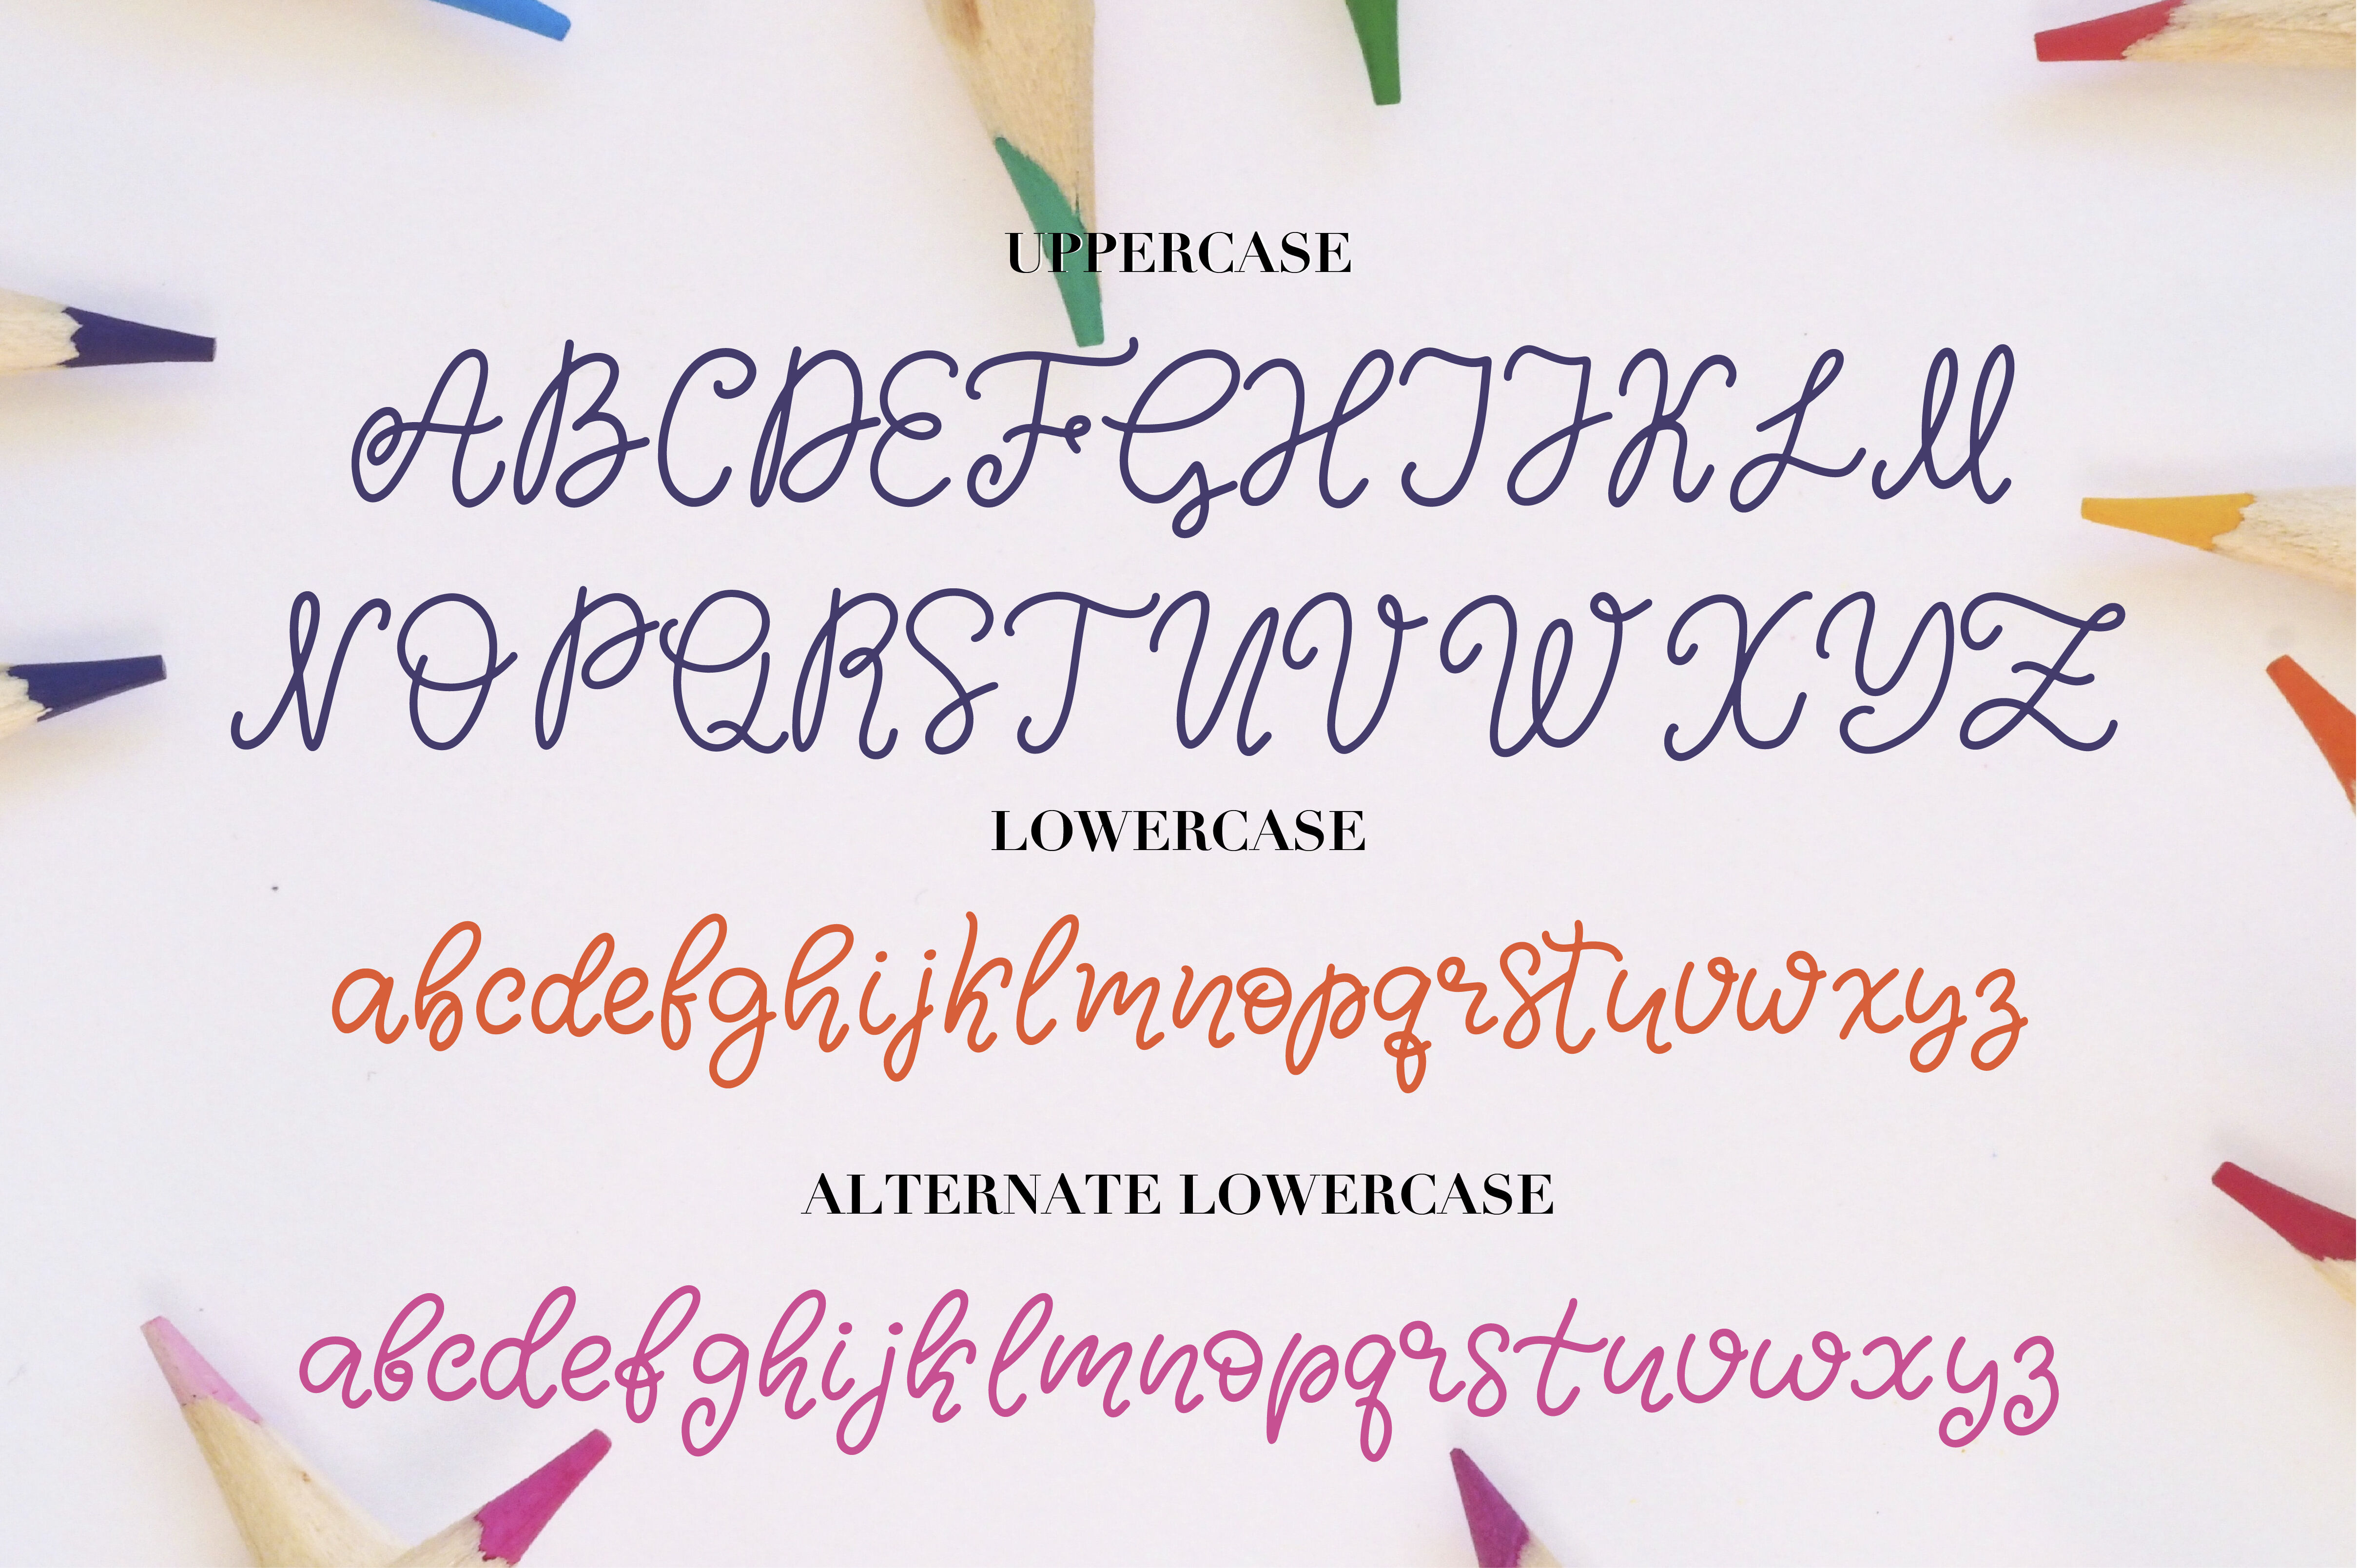 Simple Monoline A Handwritten Font By Almazova Dolzhenko Thehungryjpeg Com